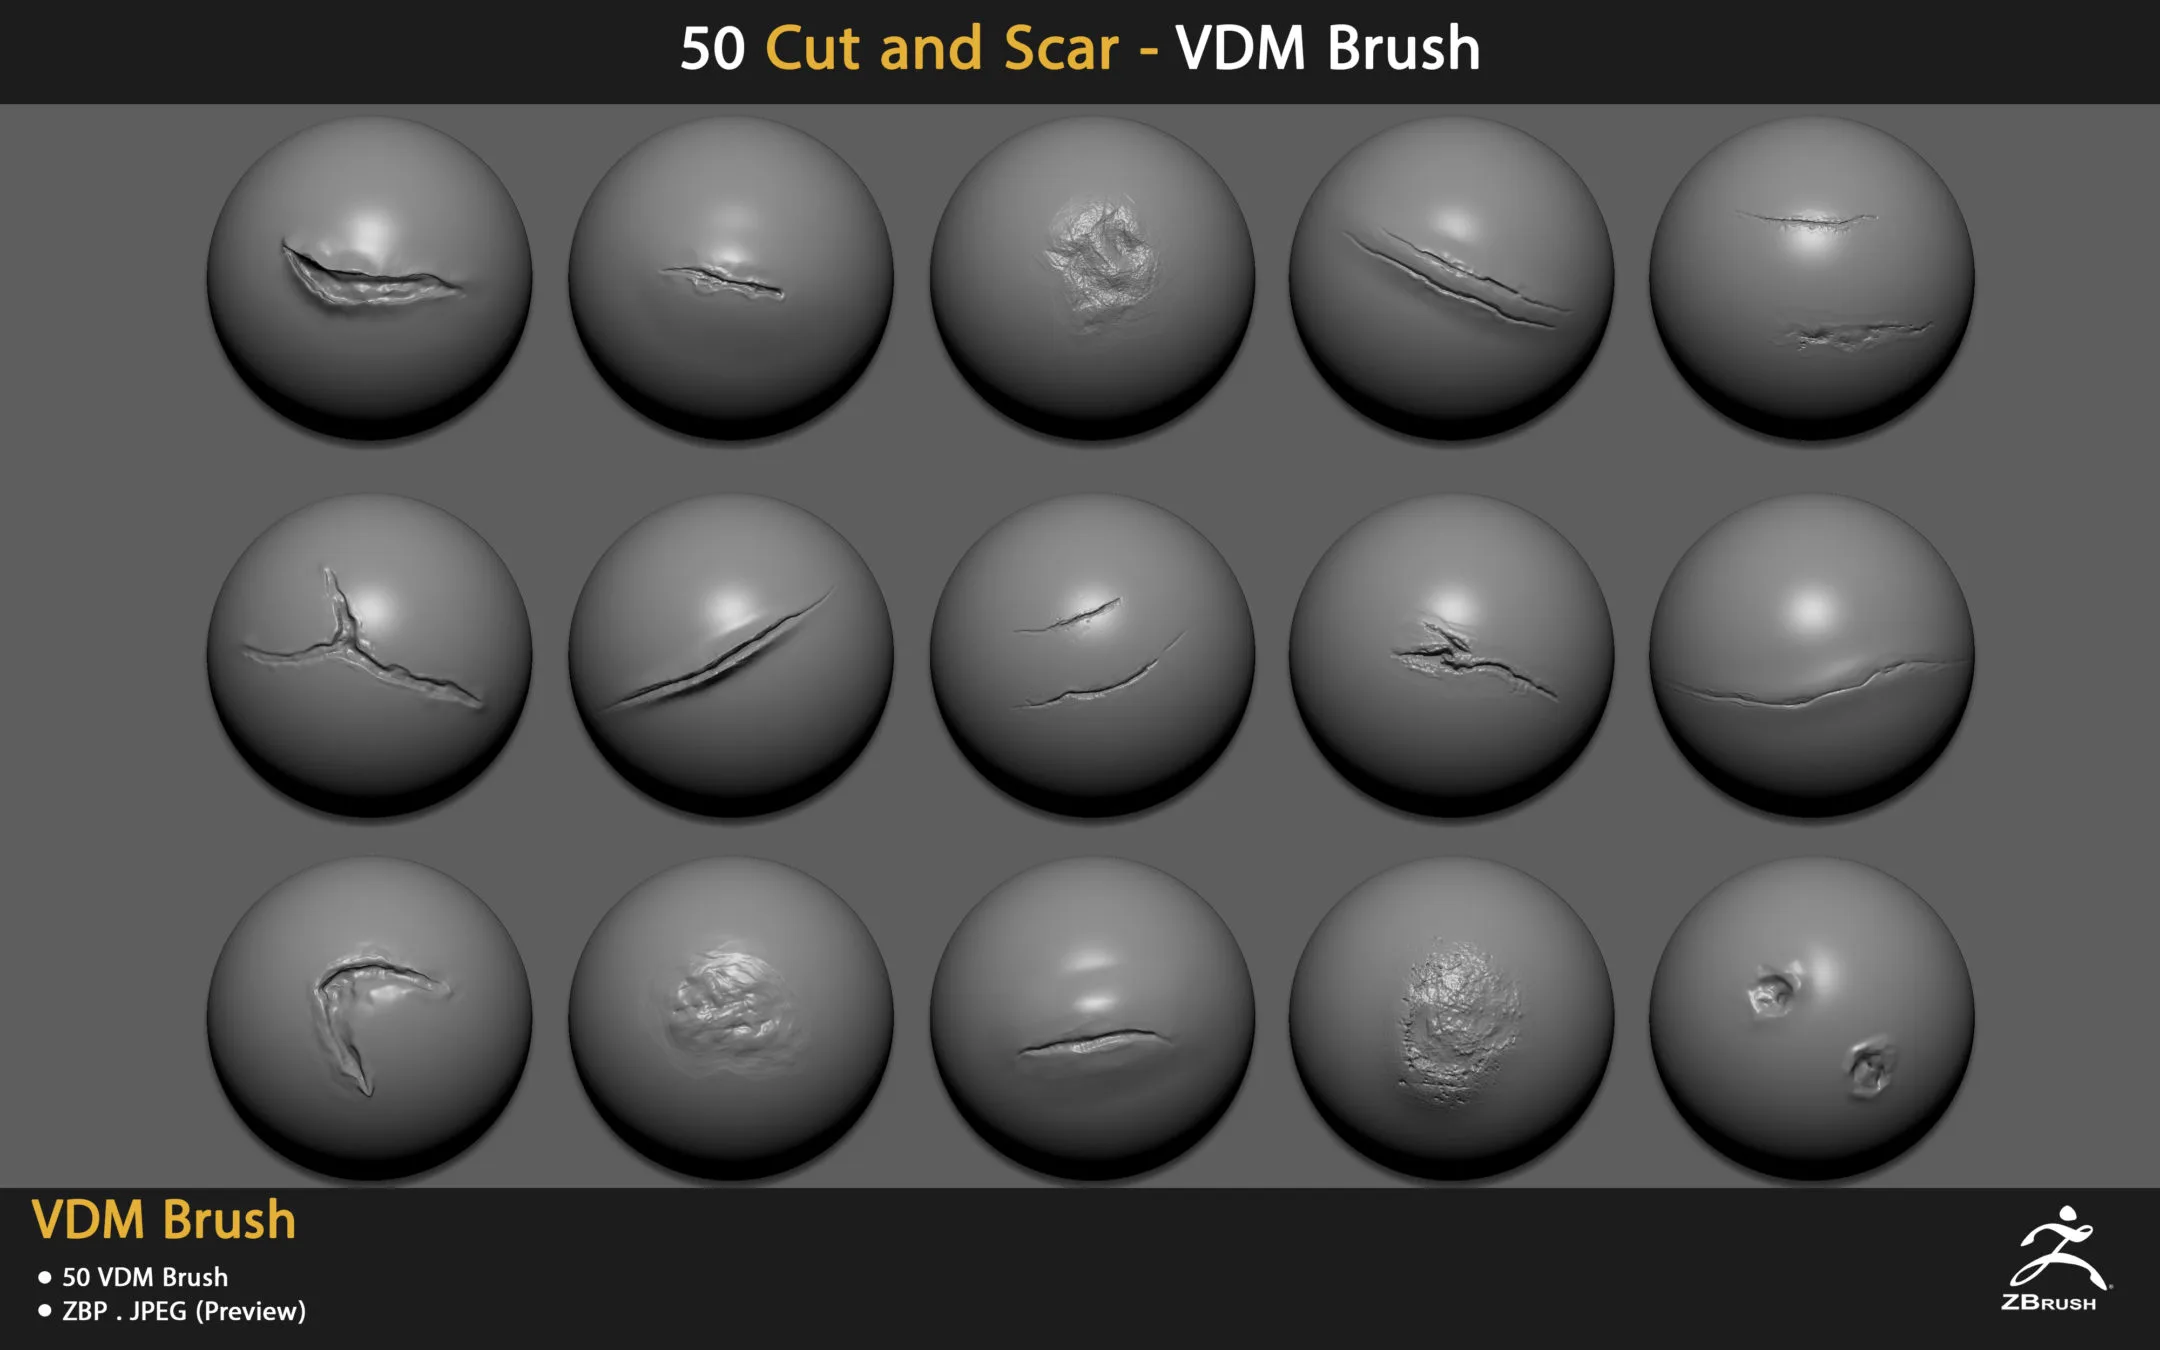 50 Cut and Scars - VDM Brush